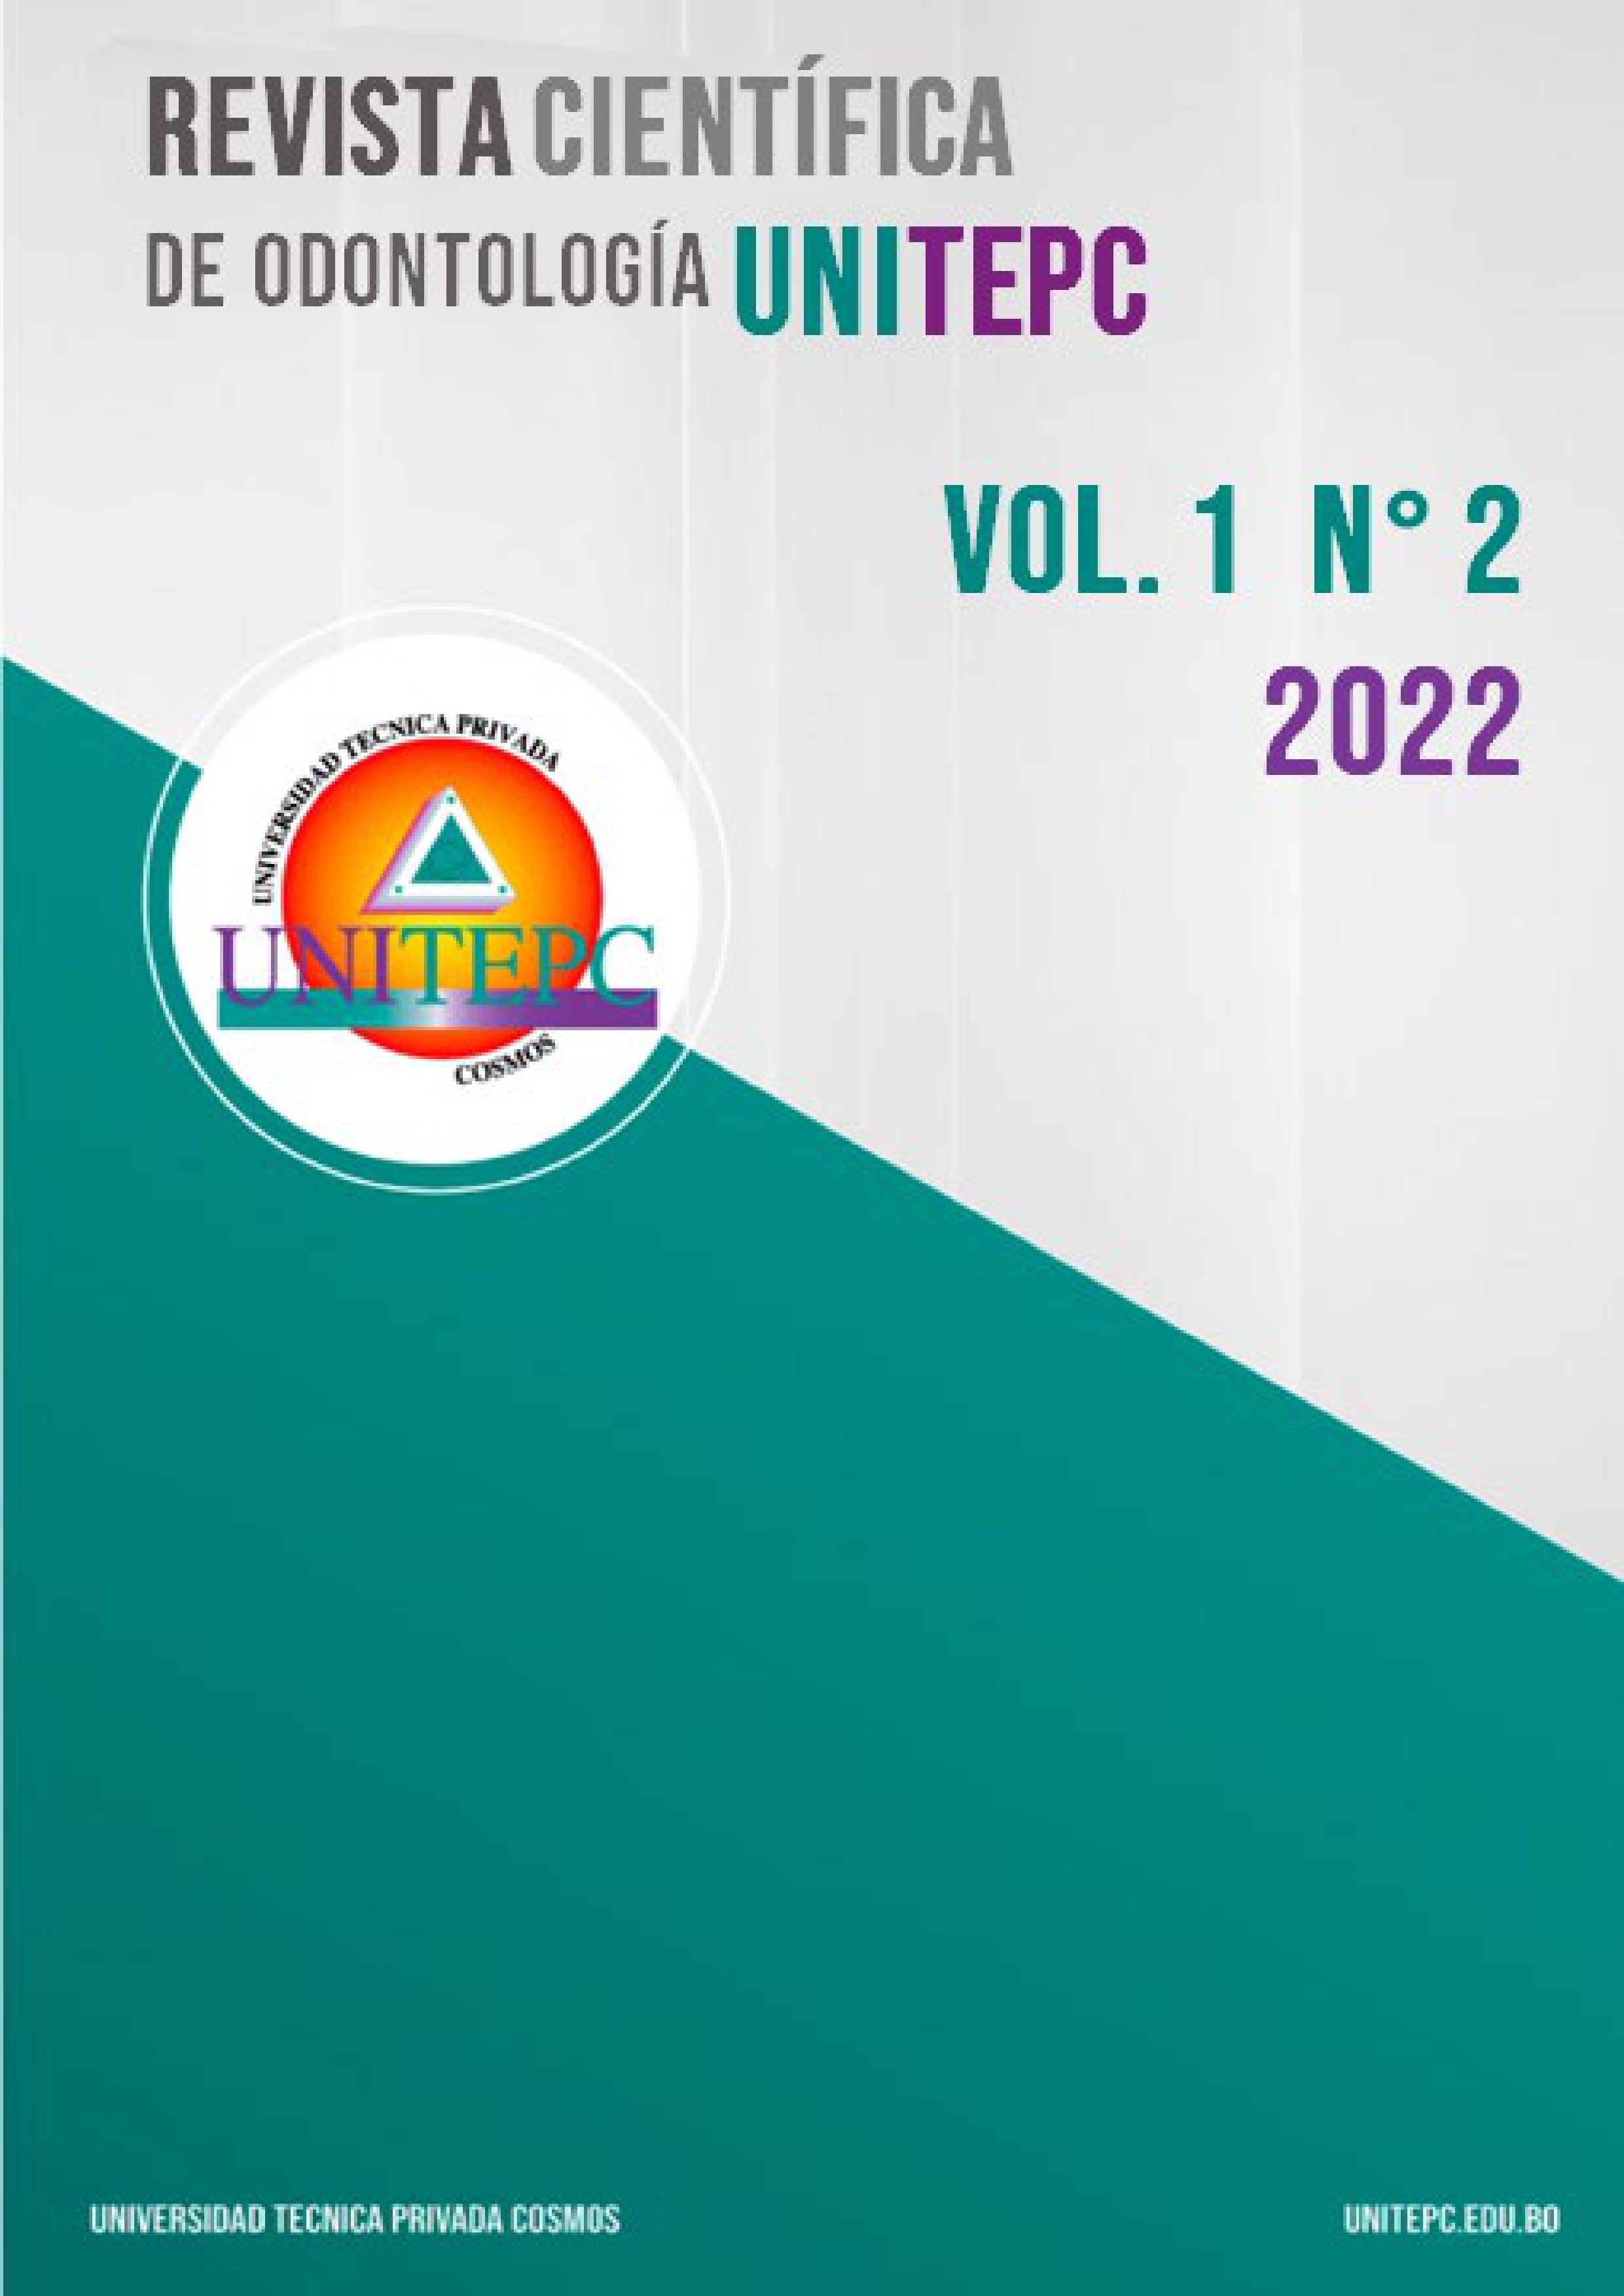 					Ver Vol. 1 Núm. 2 (2022): Revista Científica de Odontología UNITEPC
				